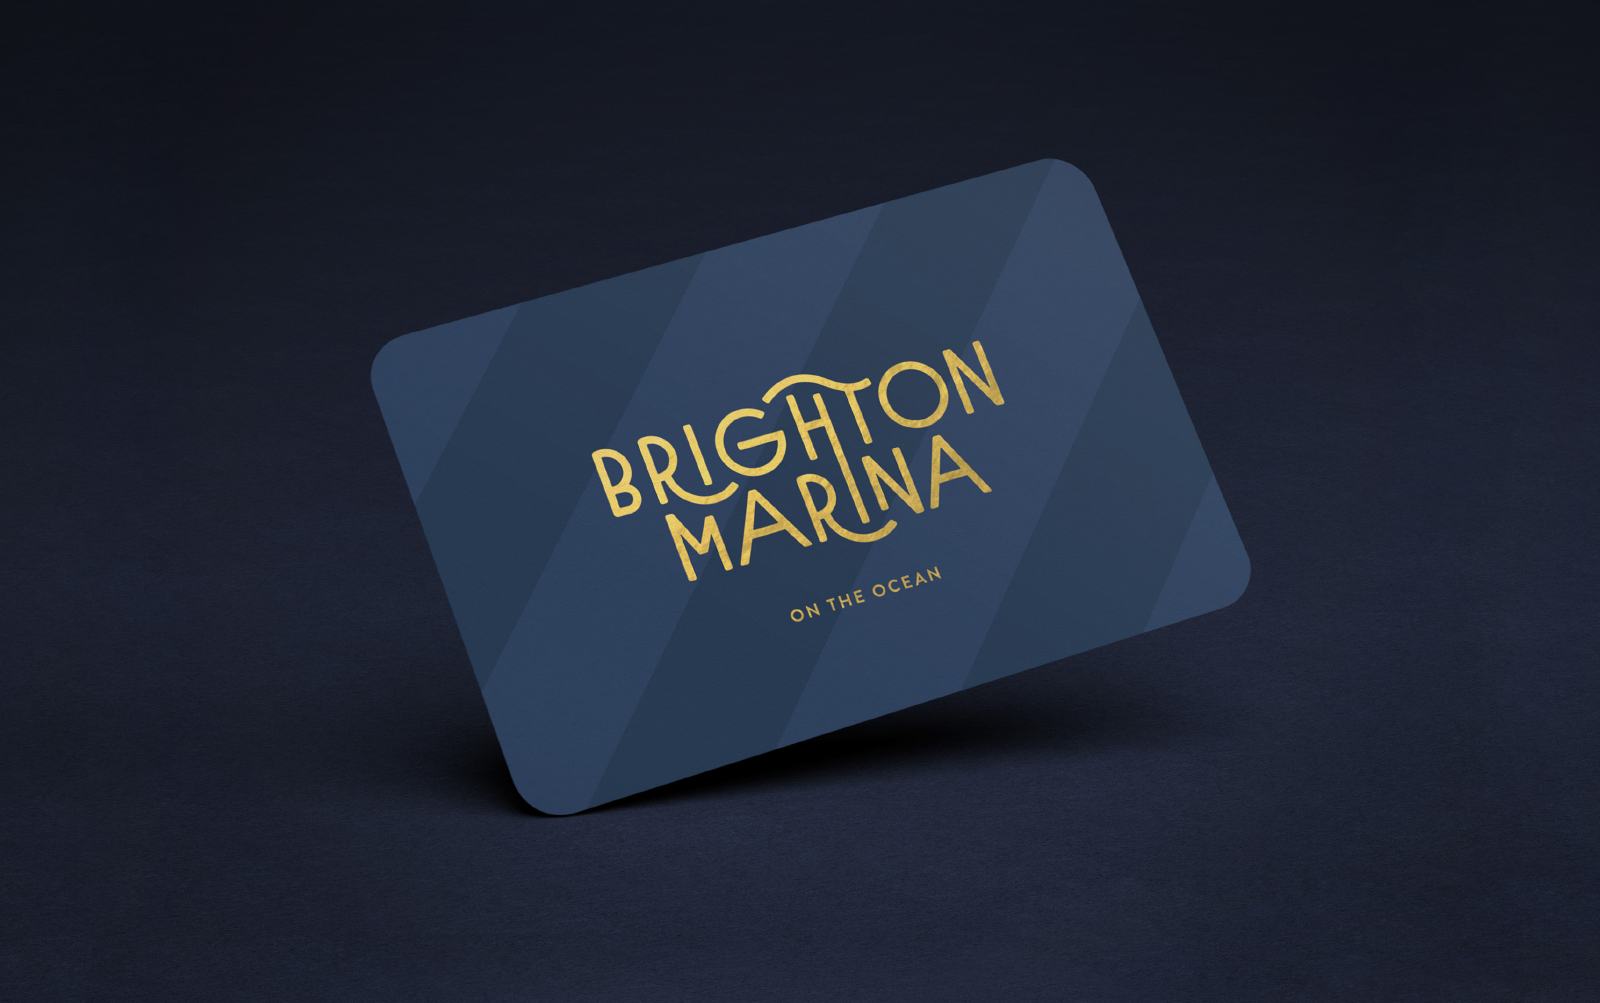 BrightonMarina_Article_Card